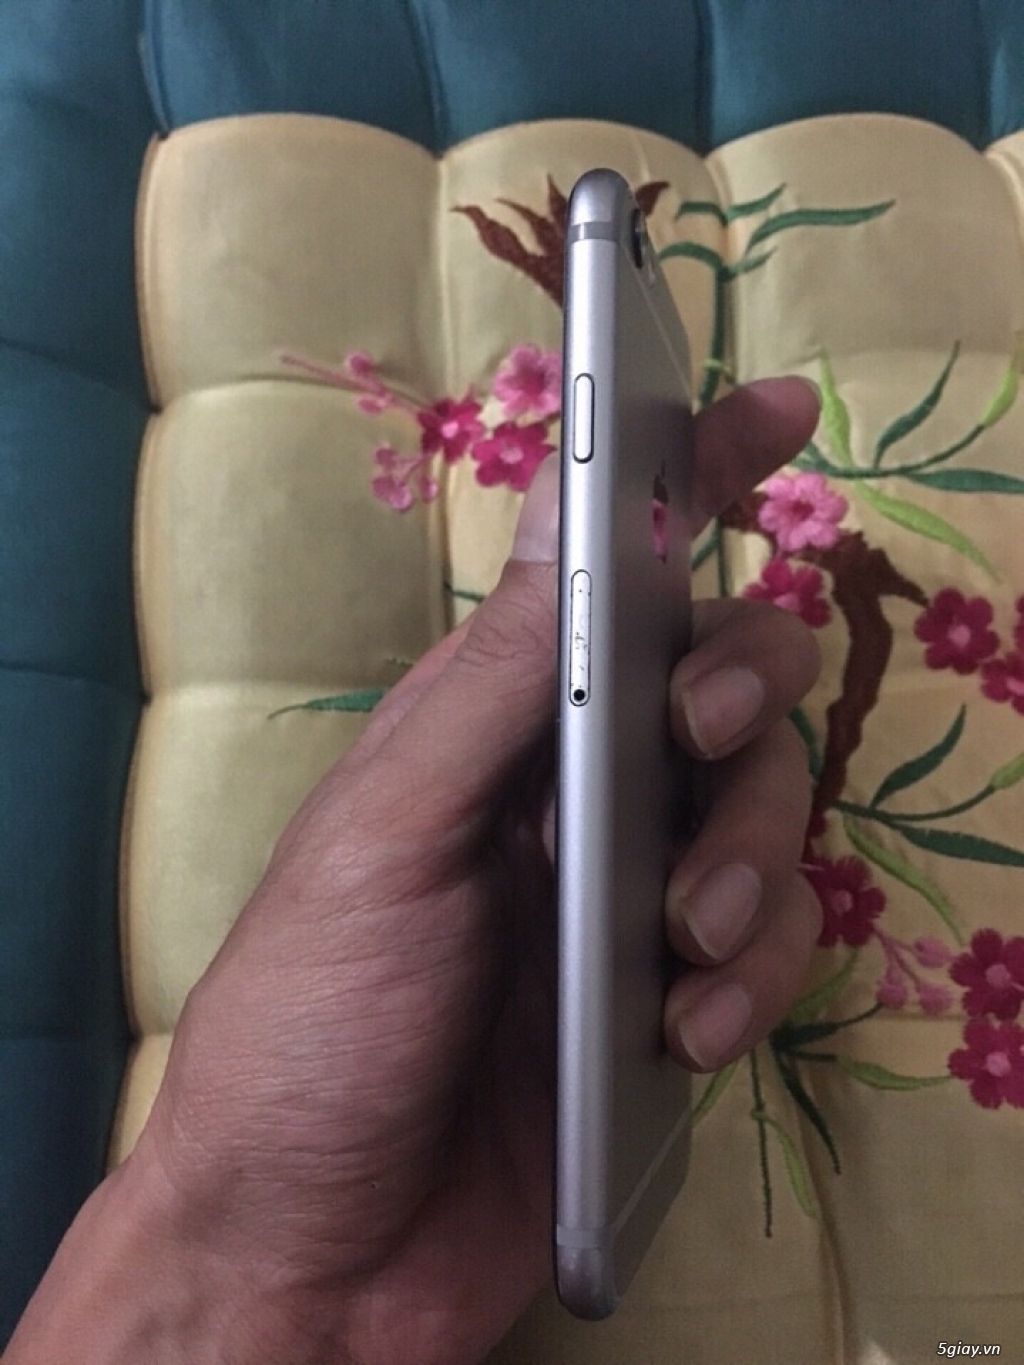 Iphone 6 64gb grey lock at&t - 2